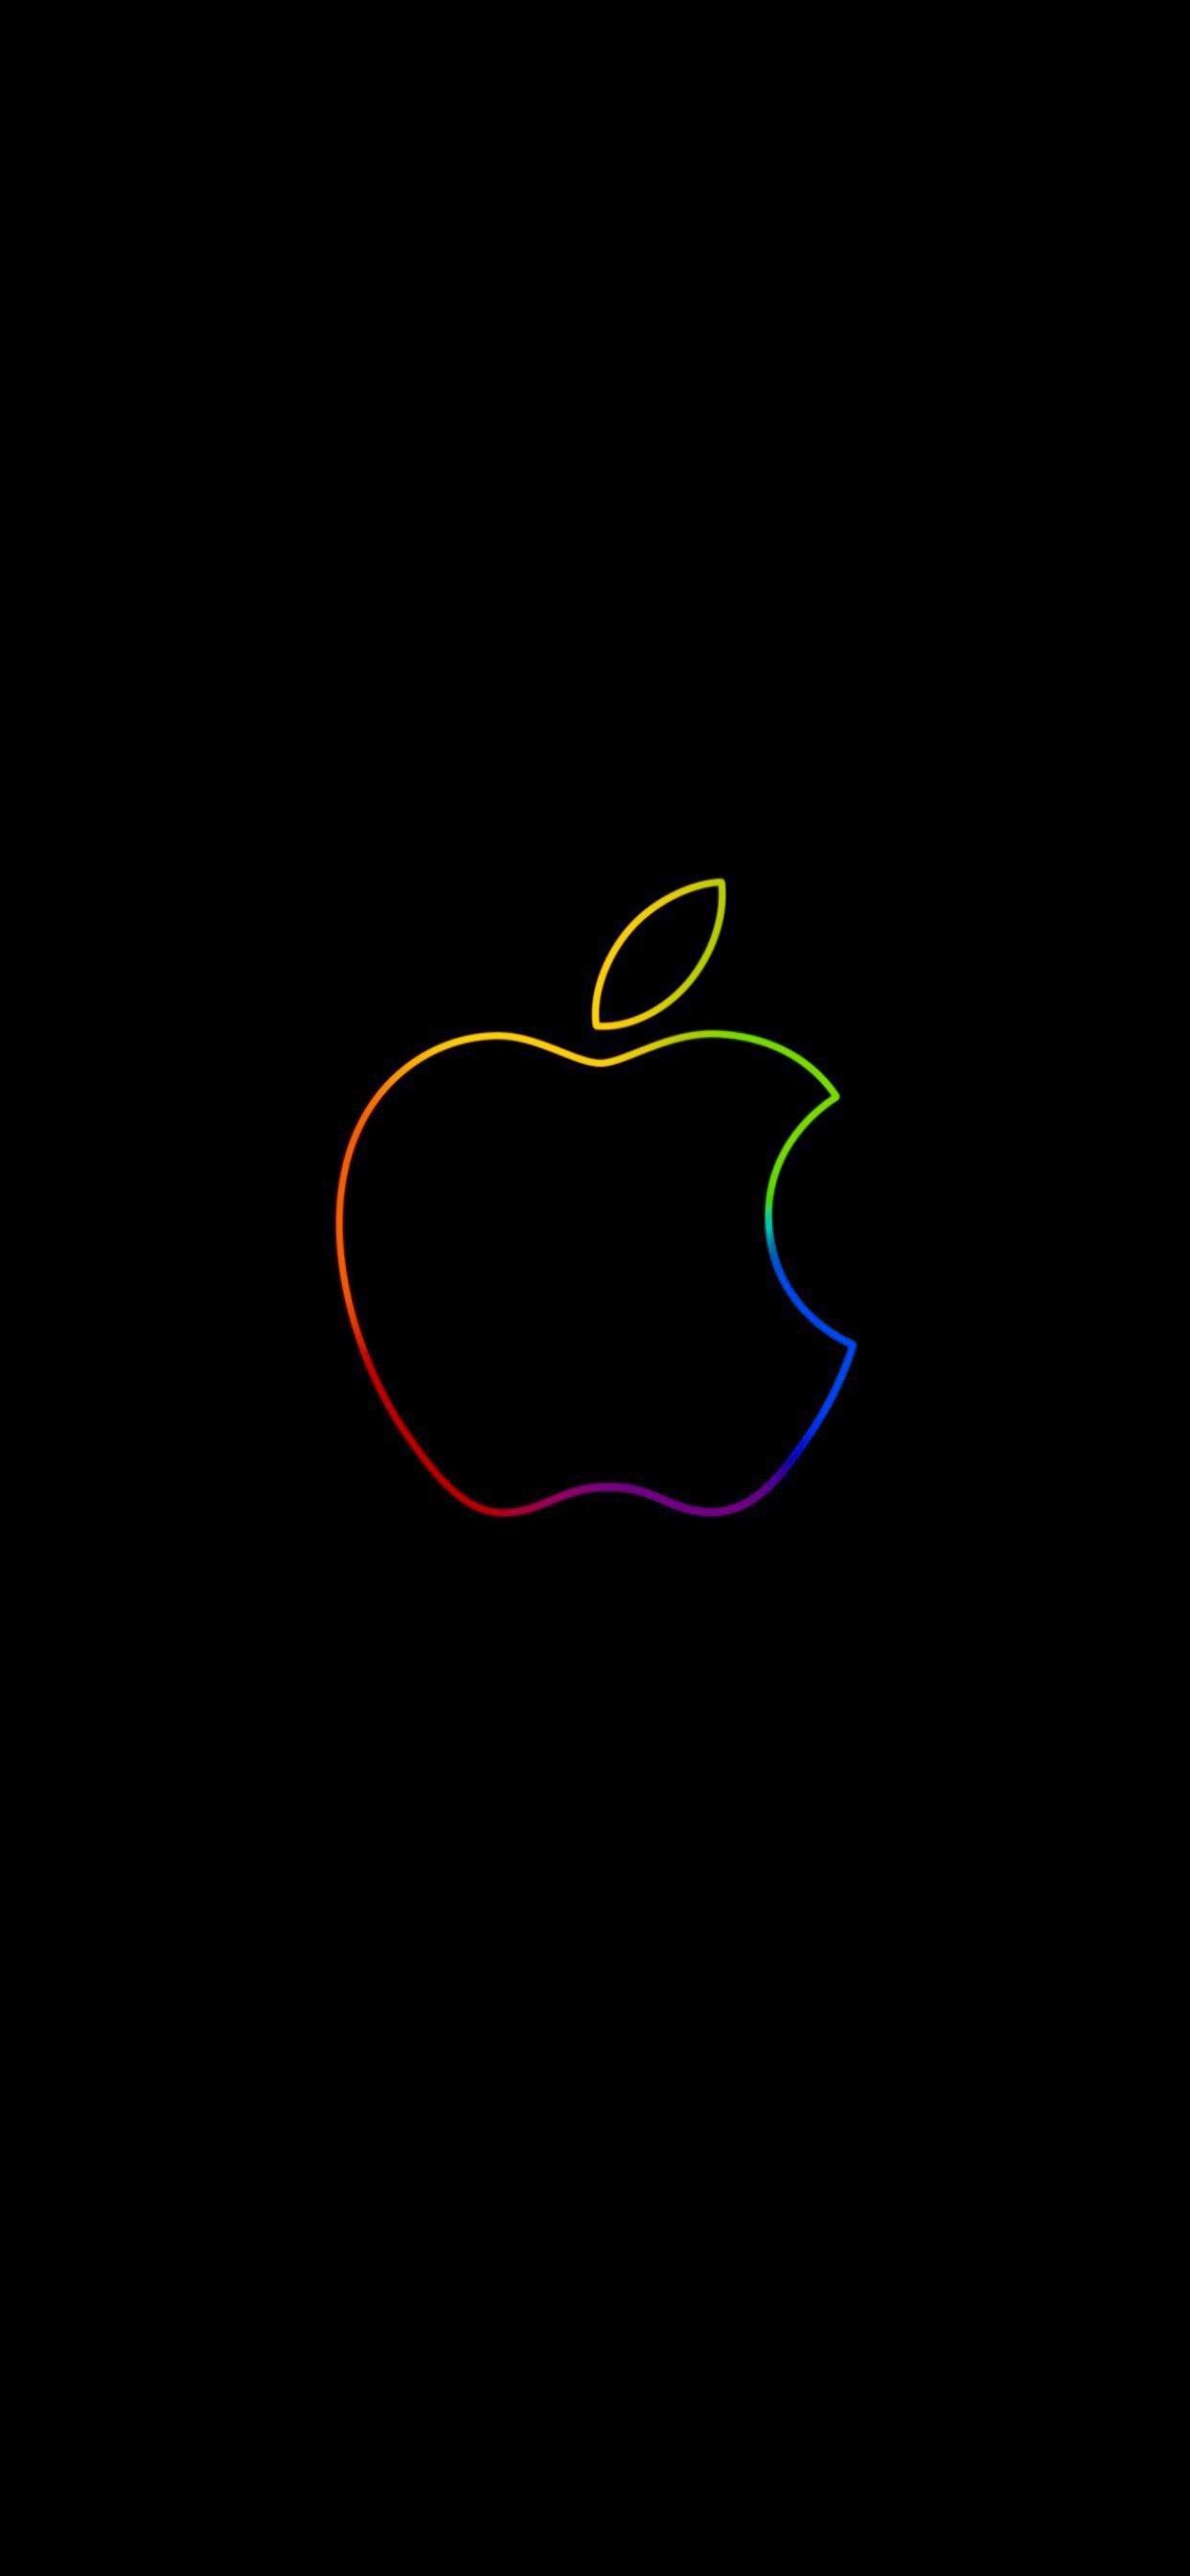 Apple Logo Neon. Apple logo wallpaper iphone, Apple wallpaper iphone, Apple logo